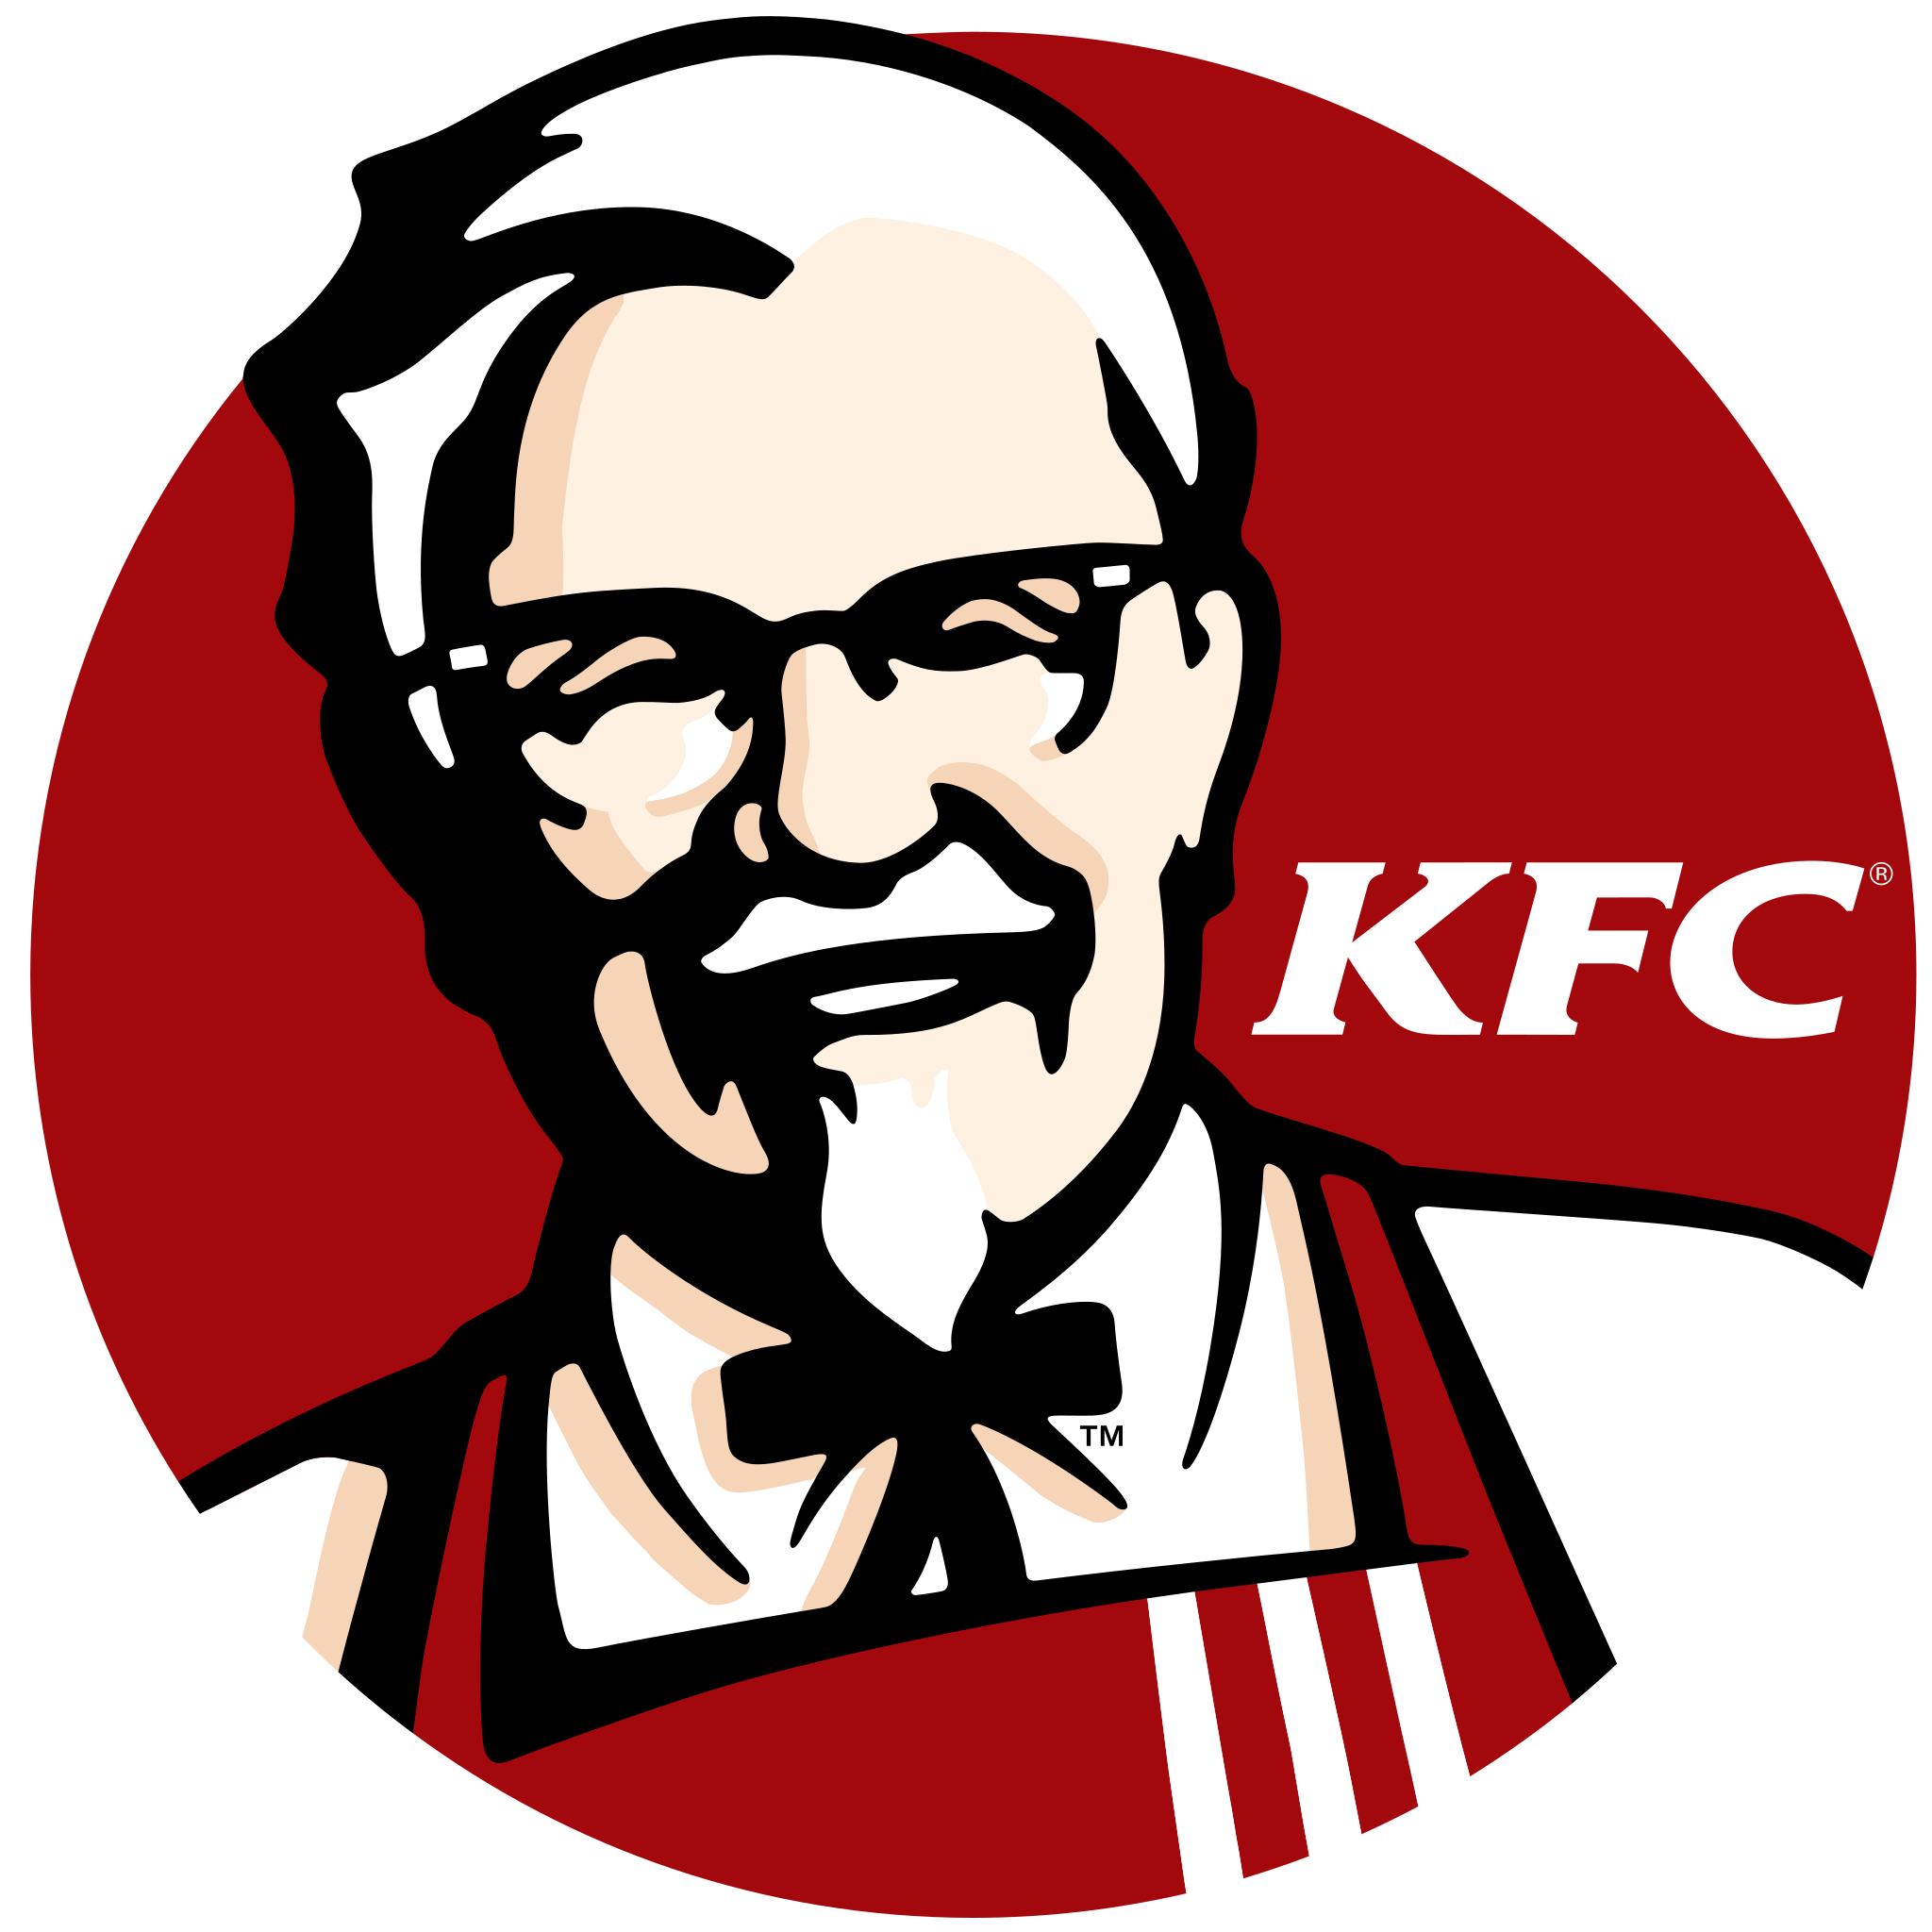 File:KFC logo.svg - Wikipedia